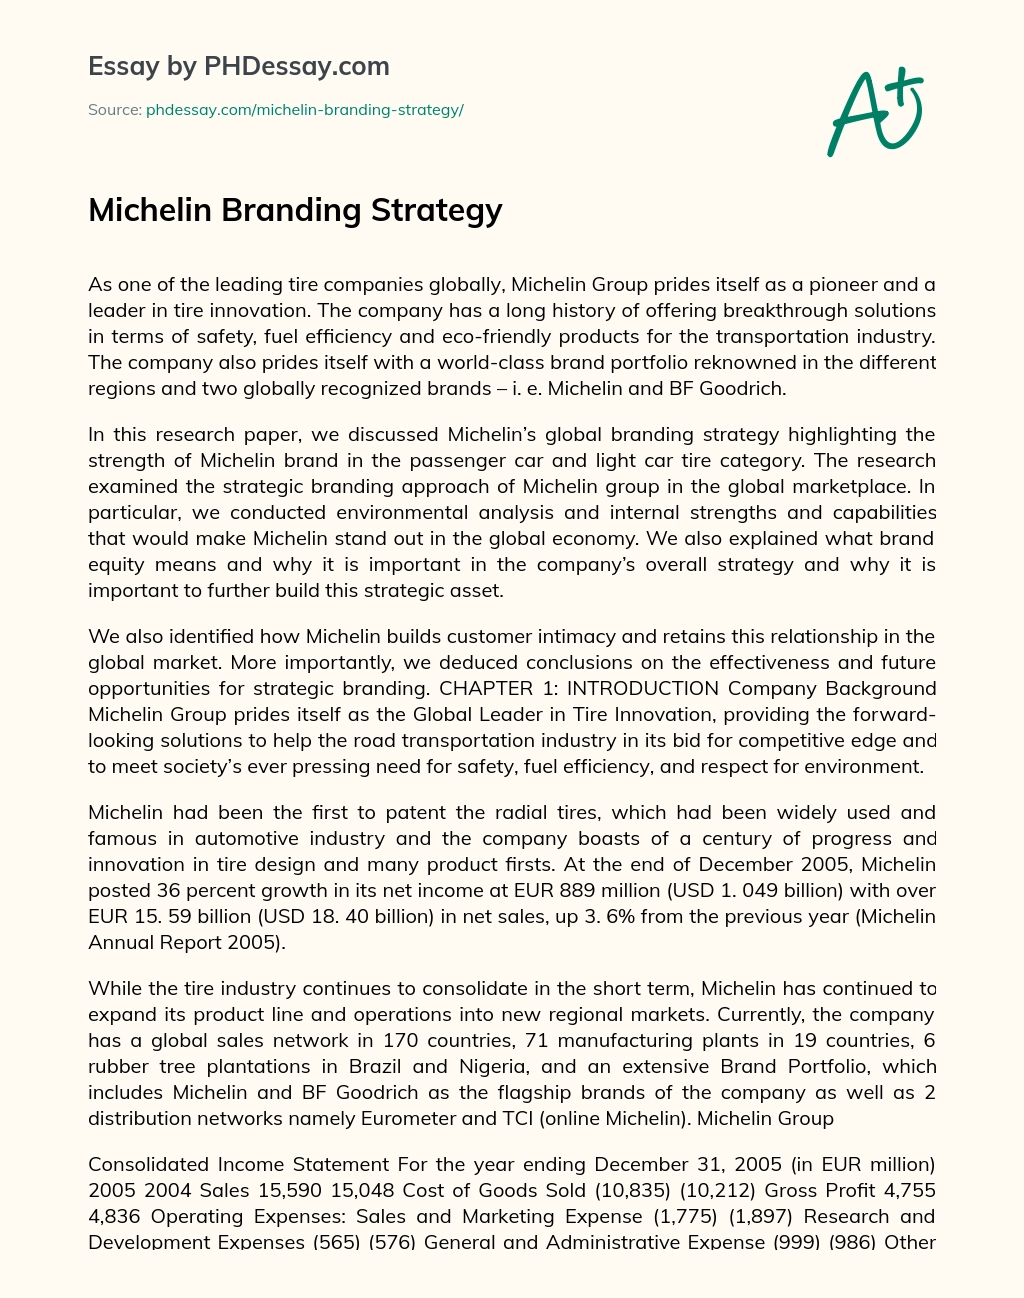 Michelin Branding Strategy essay